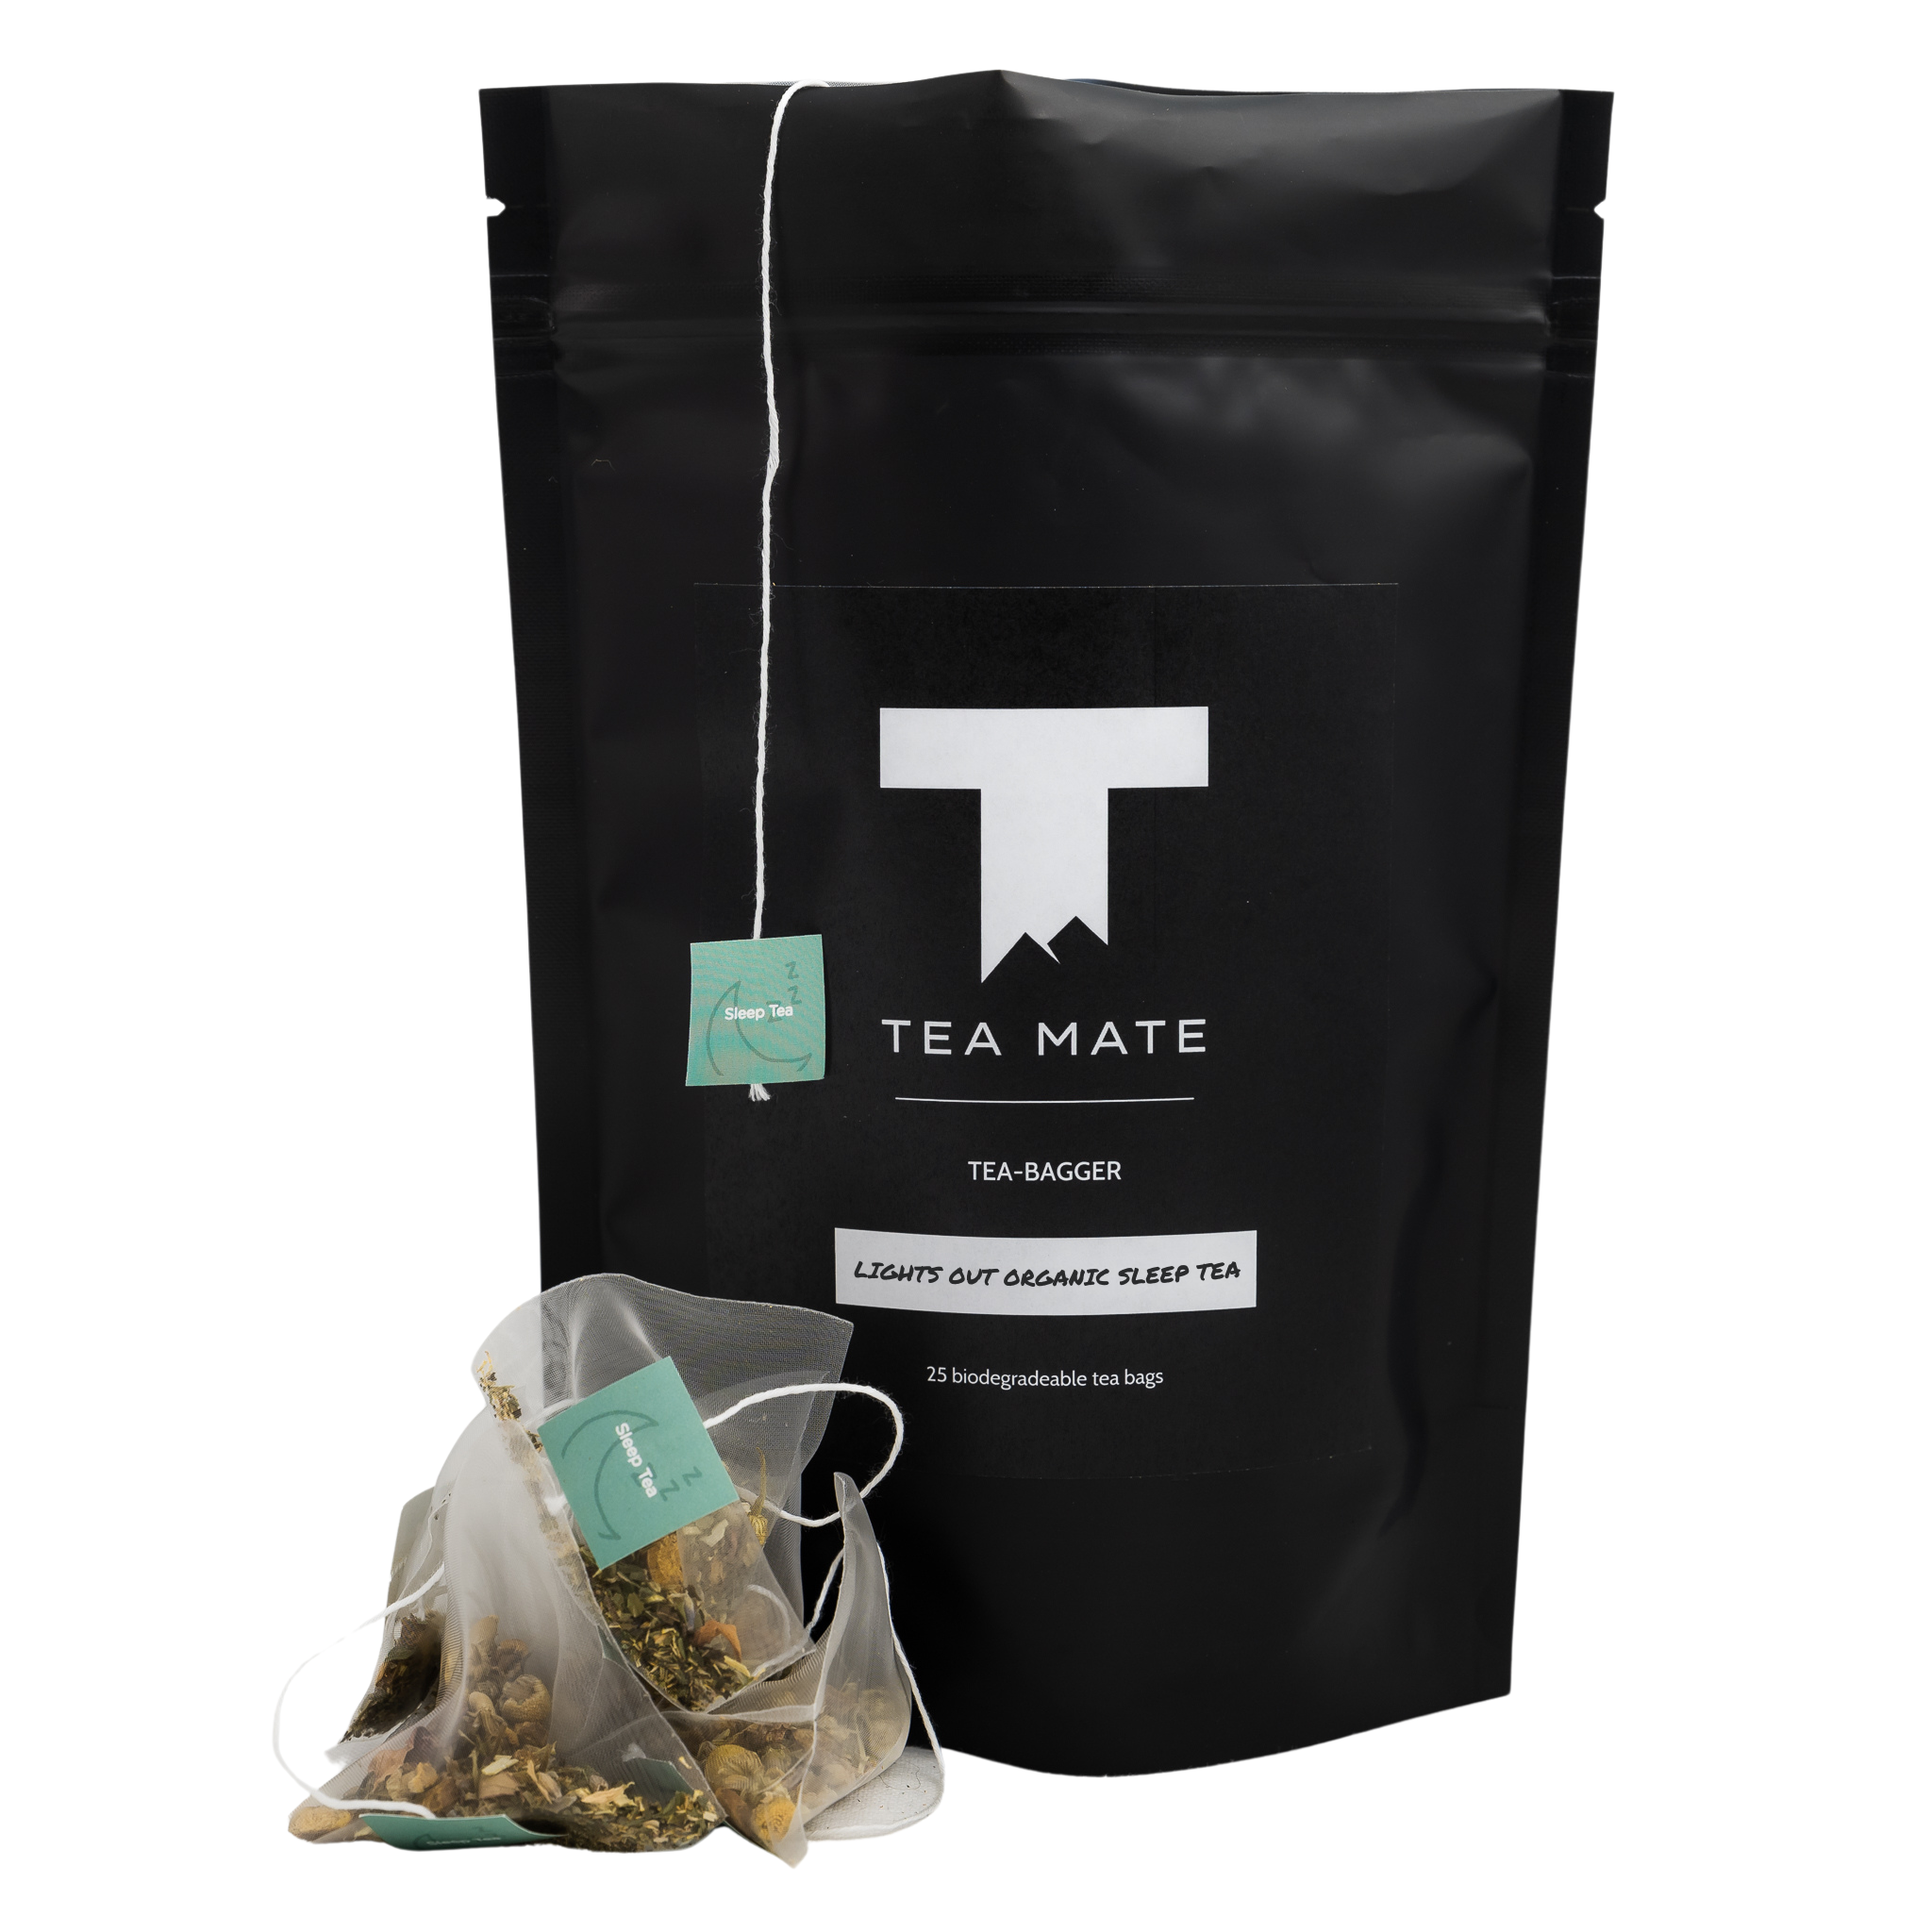 TEA MATE Lights Out Organic Sleep Tea With Skullcap, Organic Chamomile Flowers, Lemon Balm, Passionflower, Rose Petals and Lavender (25 Premium Biodegradable Tea Bags)